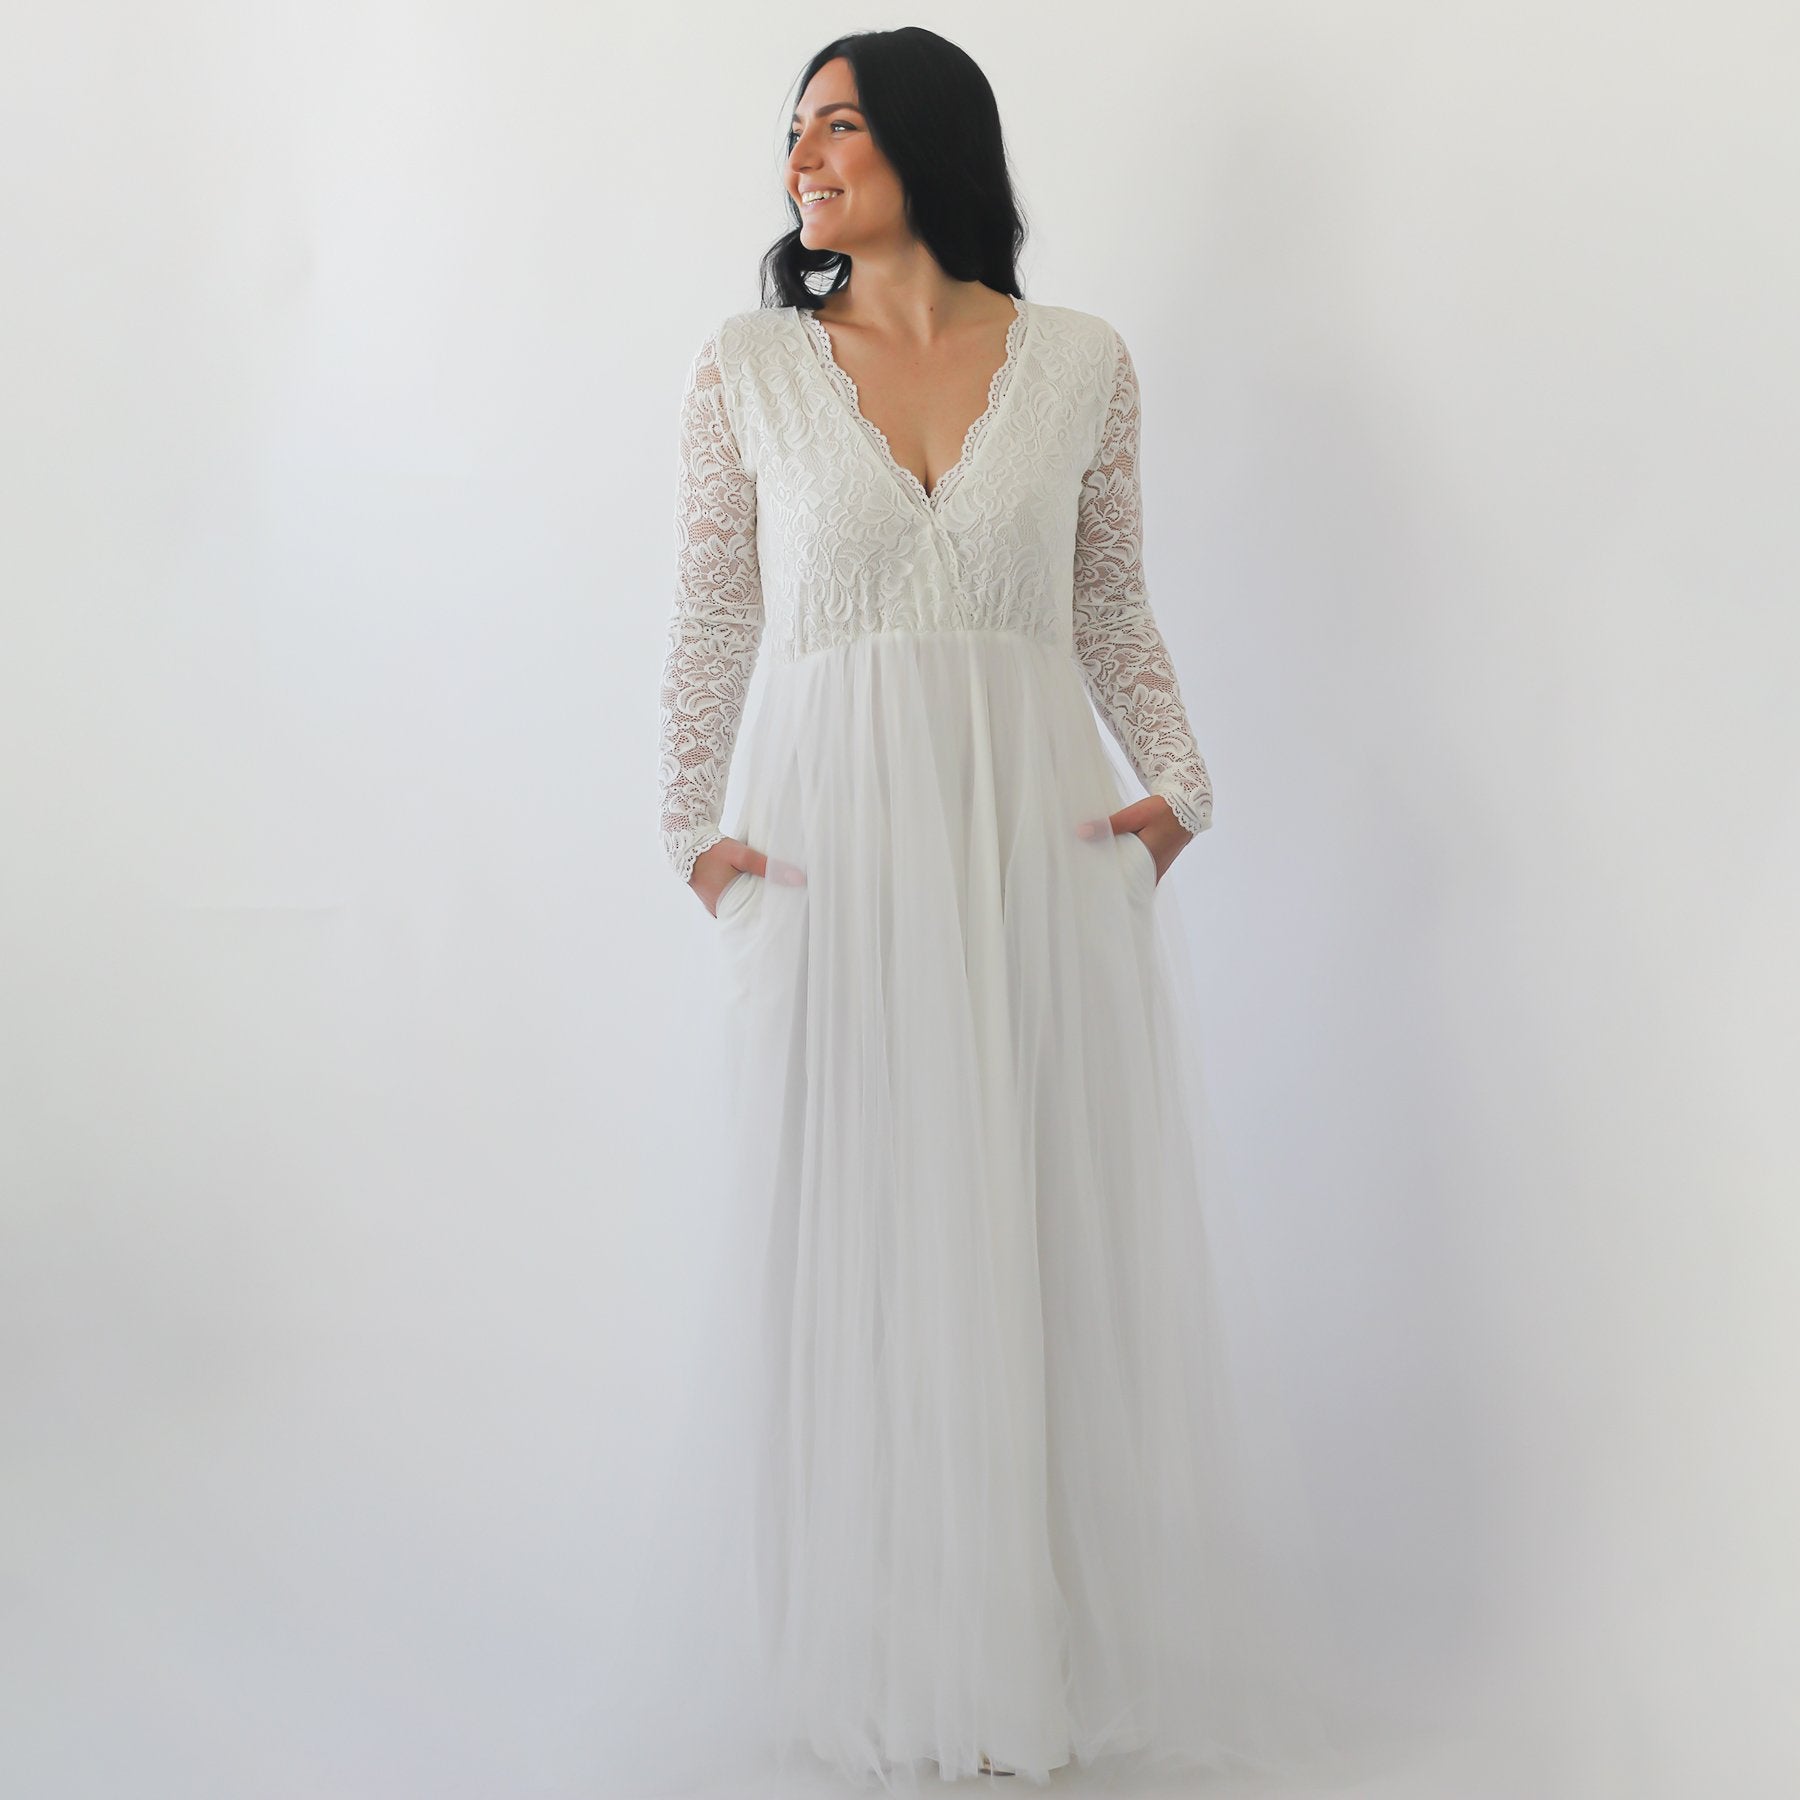 Ivory Wedding Dress With Pockets #1266 ...